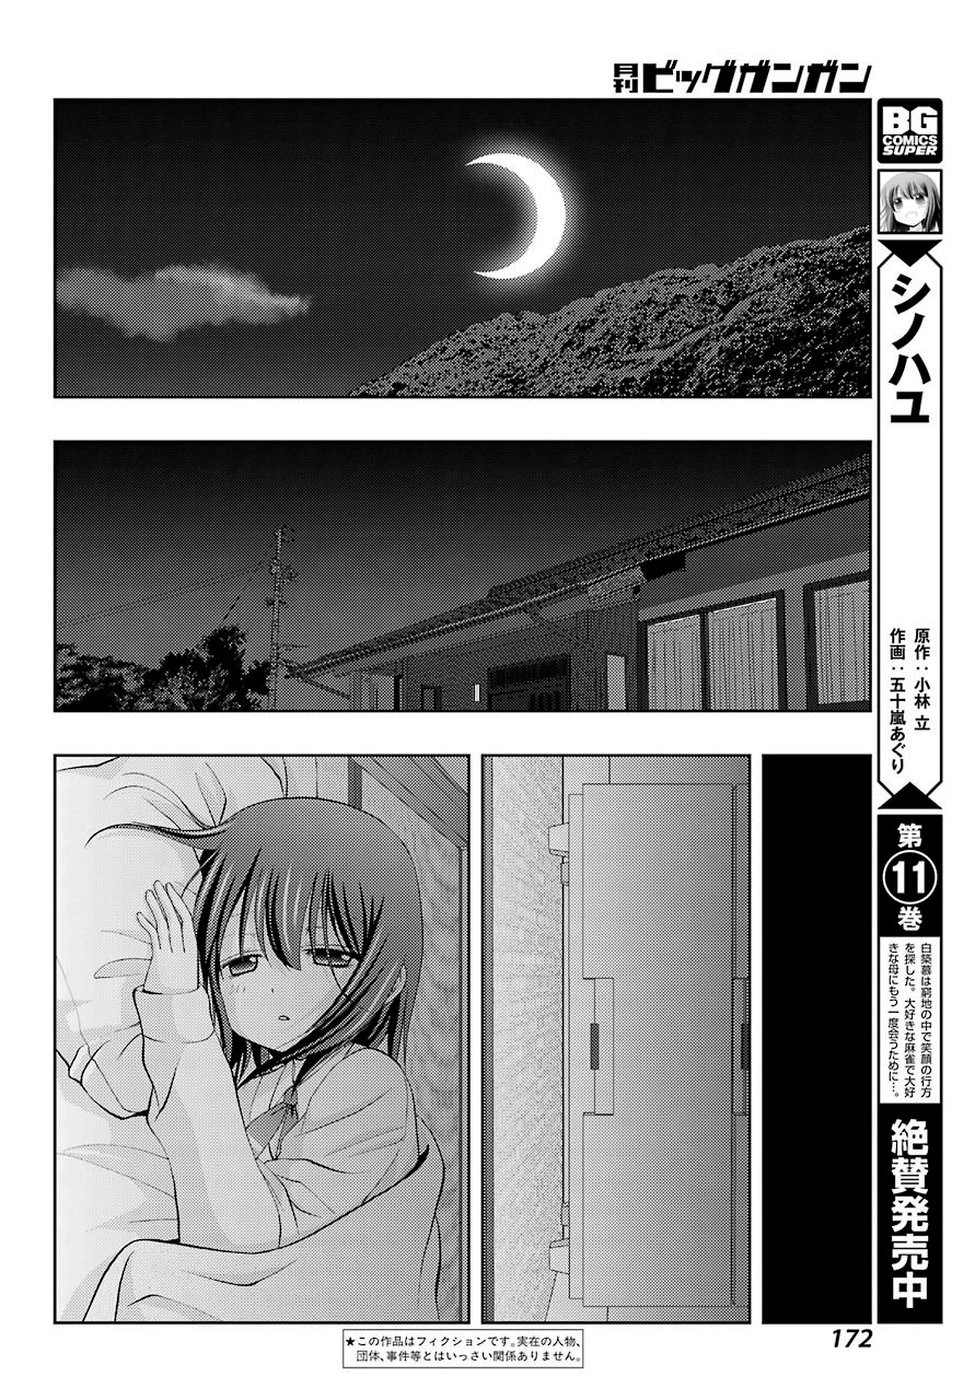 Shinohayu - The Dawn of Age Manga - Chapter 071 - Page 2